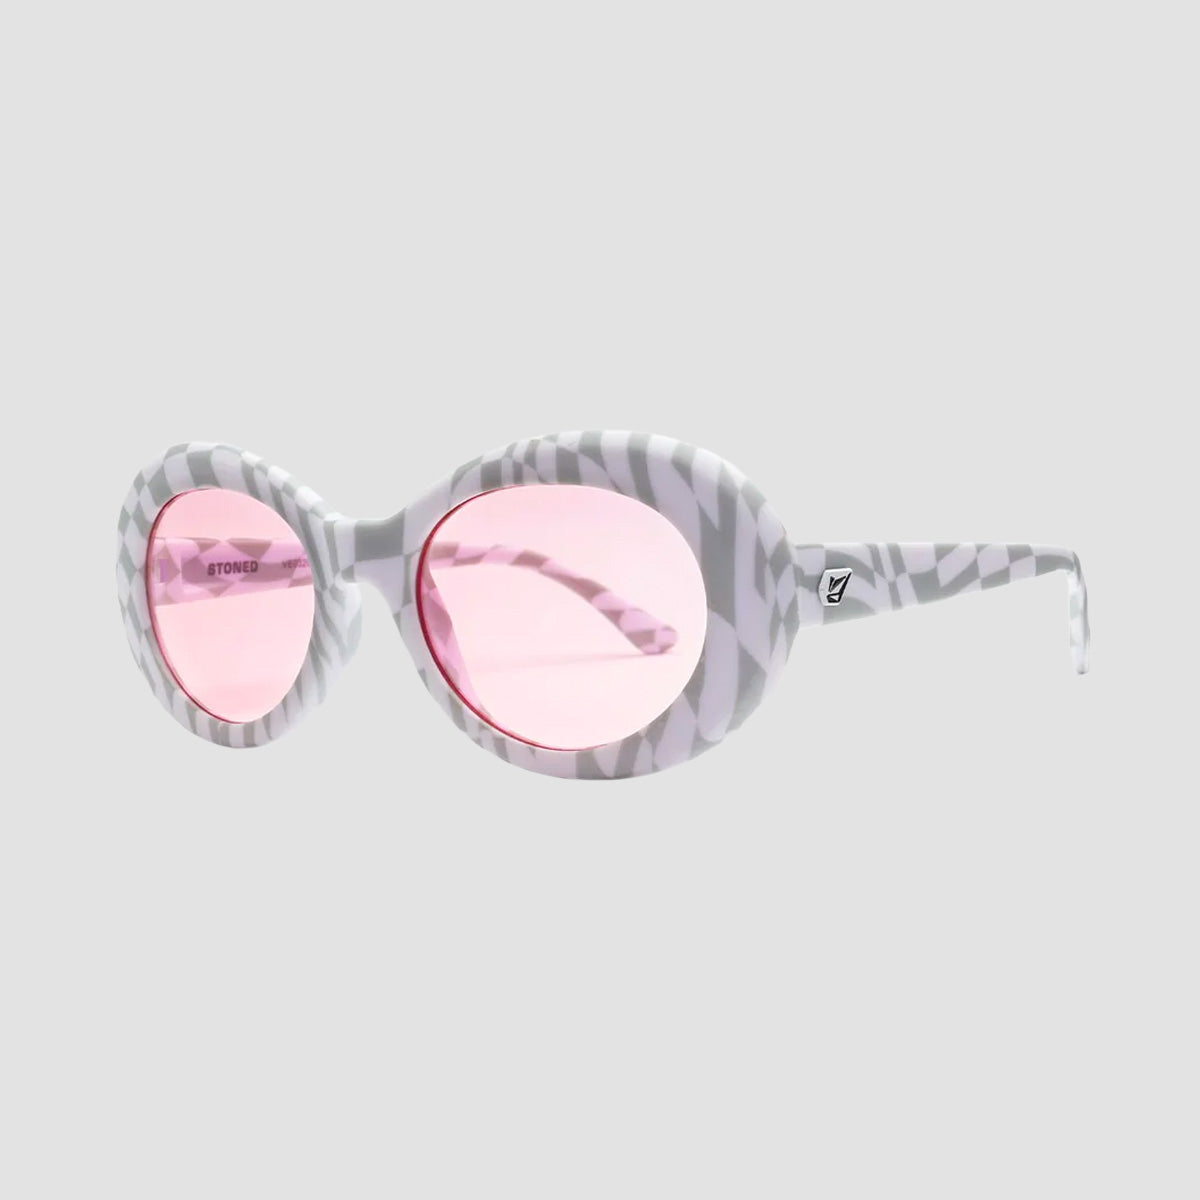 Volcom Stoned Sunglasses Check Her/Rose - Unisex